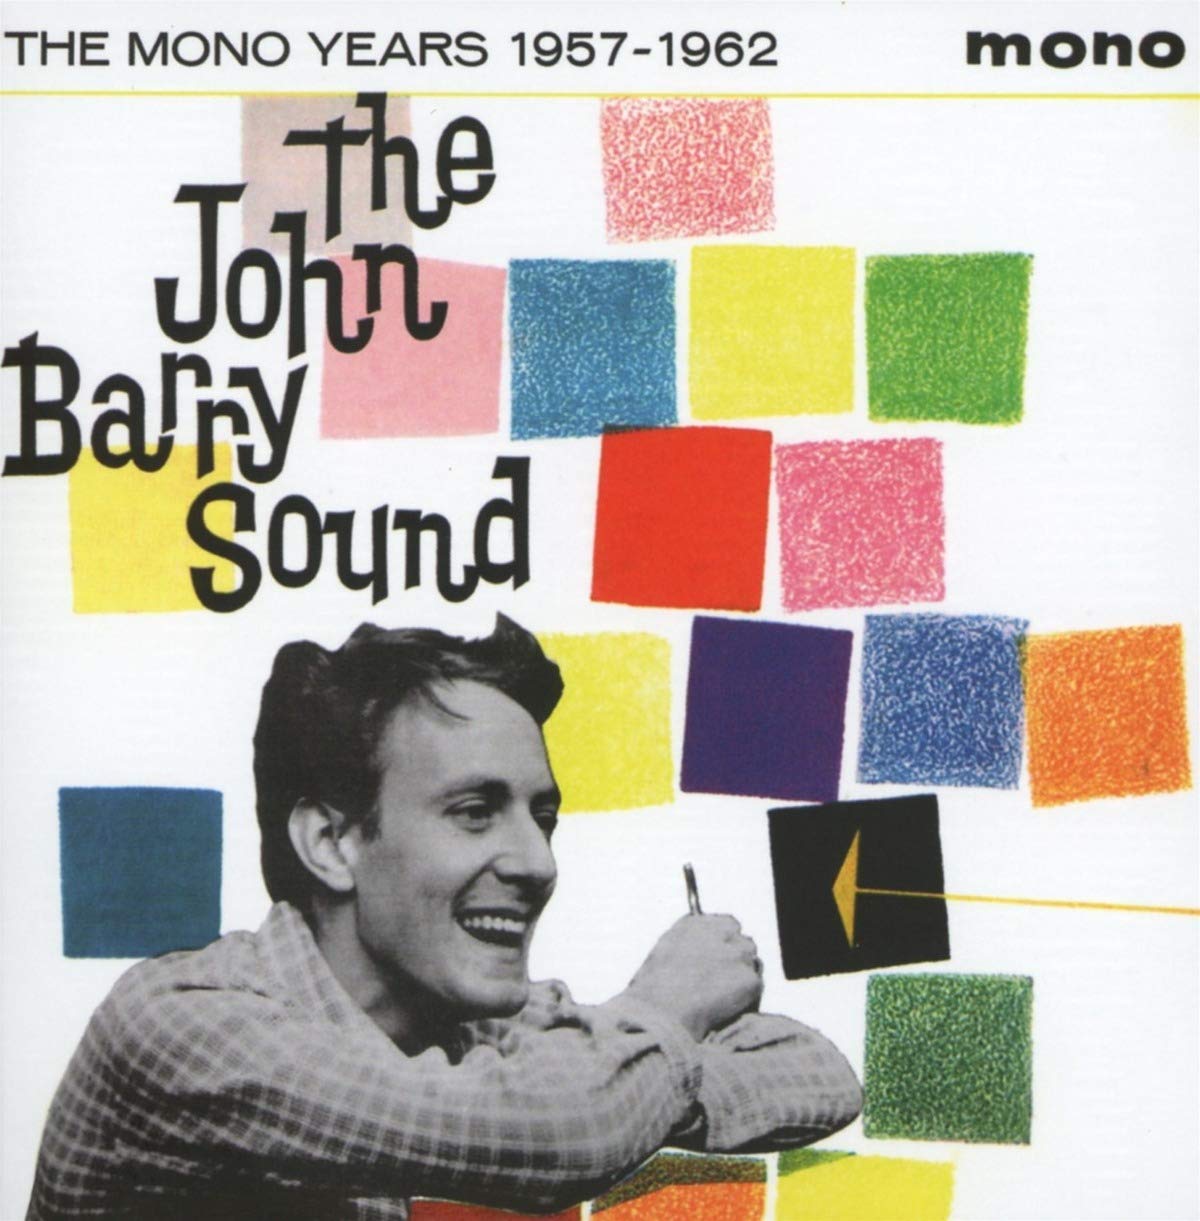 JOHN BARRY / ジョン・バリー / THE MONO YEARS 1957-1962: 3CD BOXSET